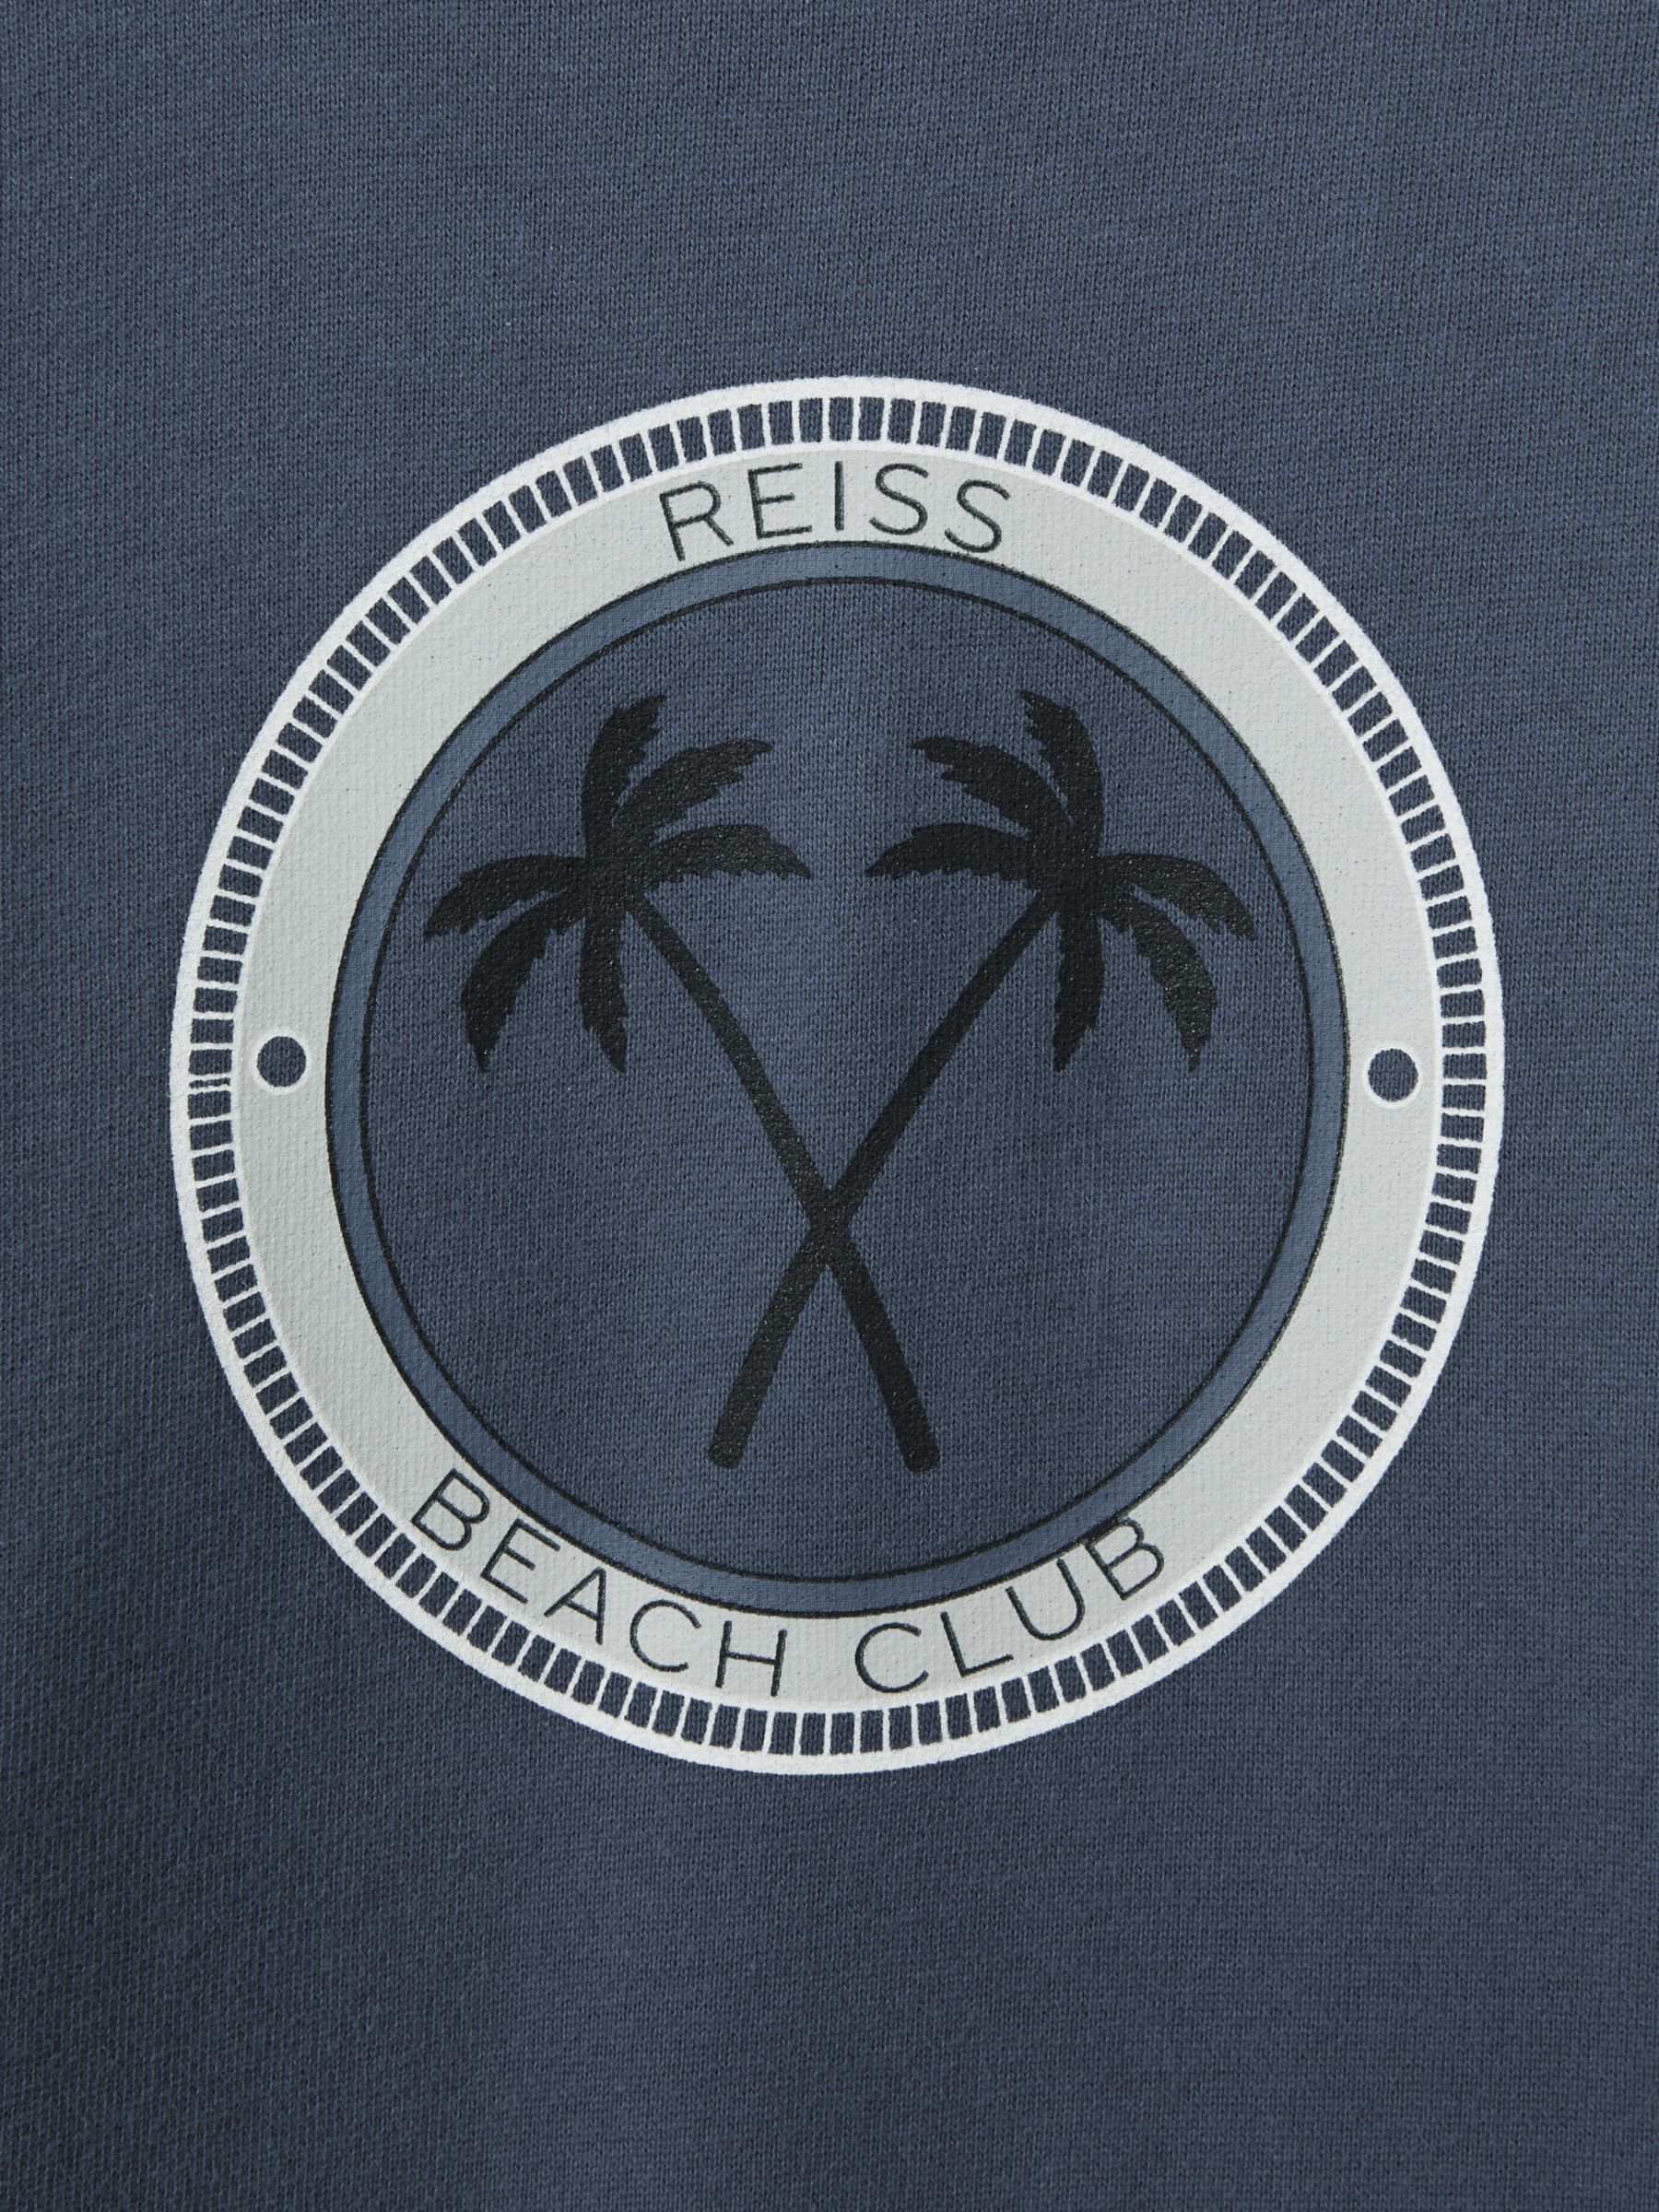 Buy Reiss Kids' Marin Beach Club Sweatshirt Online at johnlewis.com